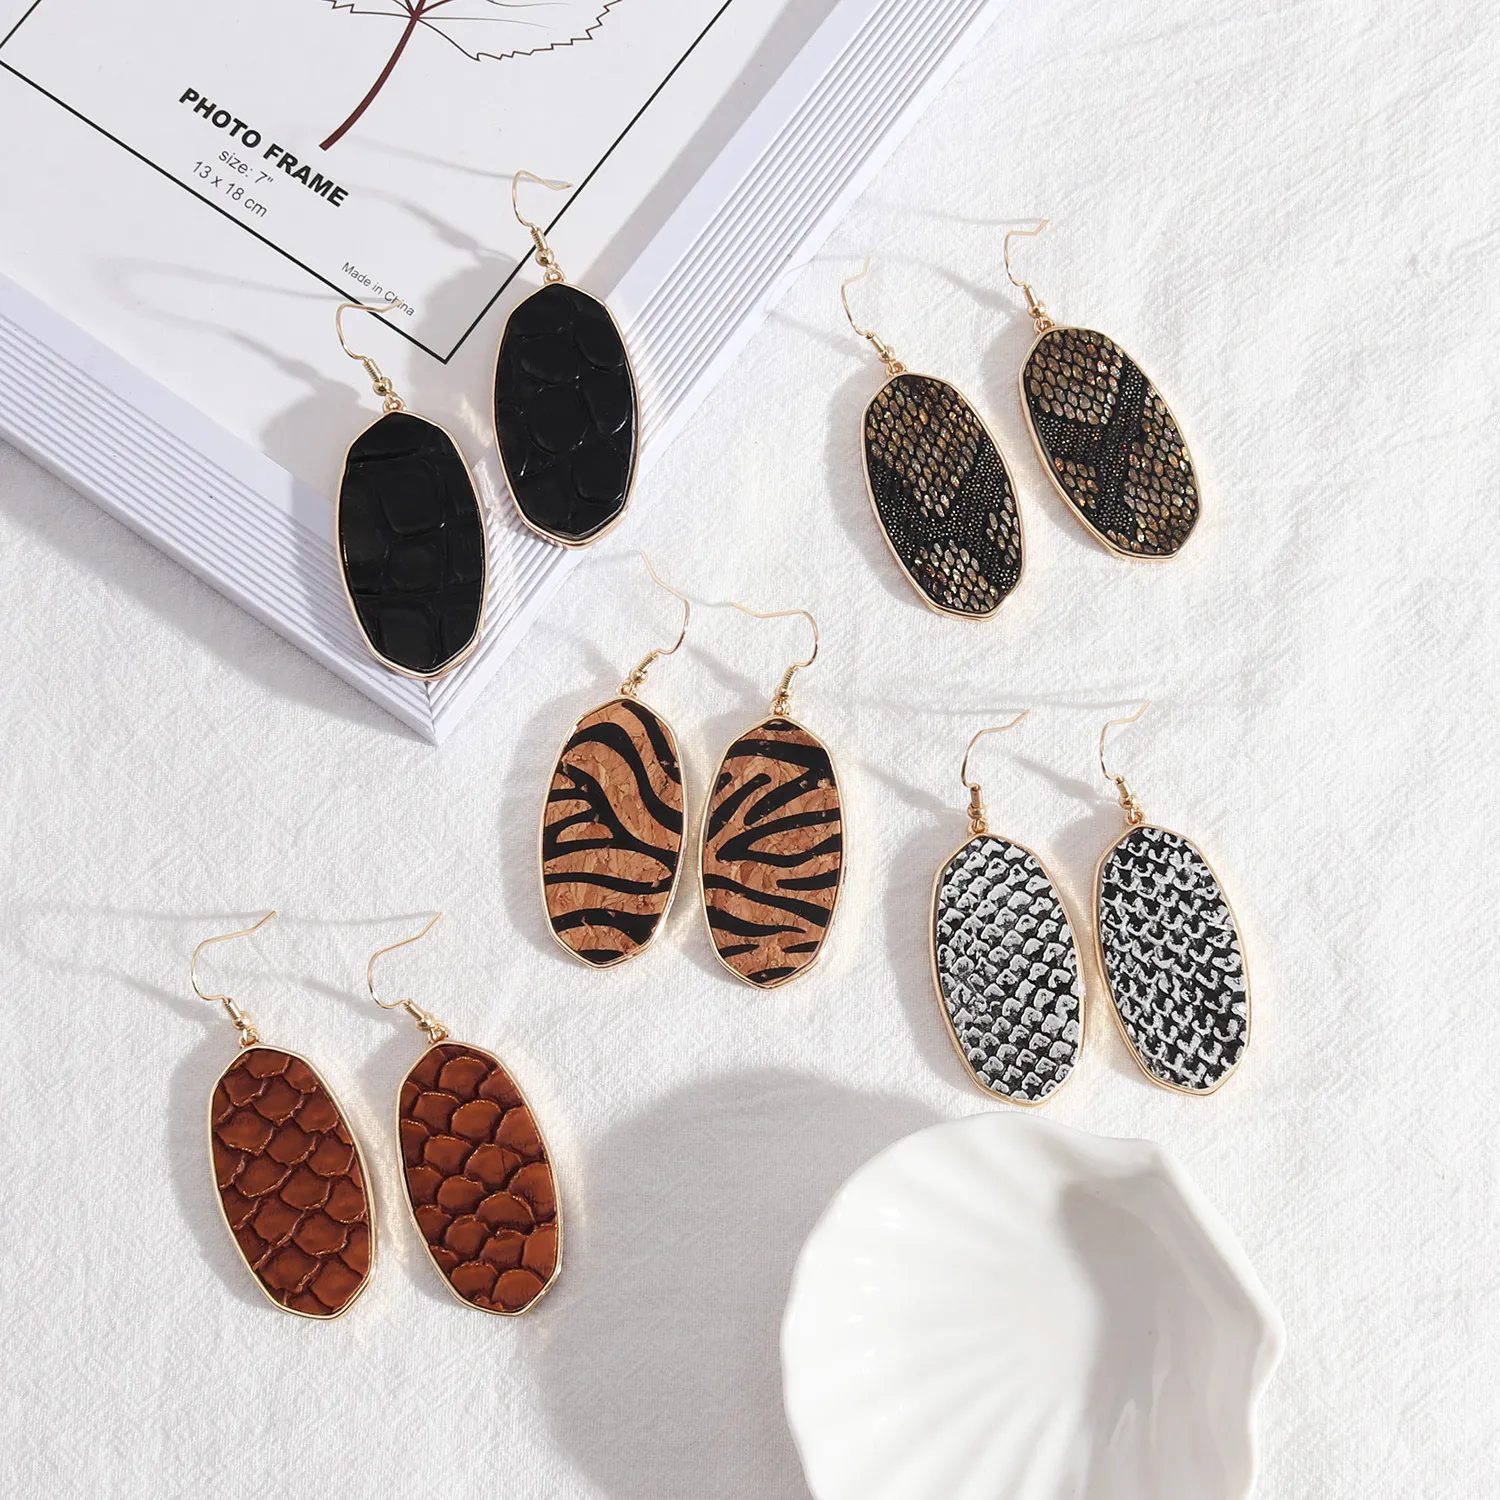 Designer Hexagon Oval PU Leather Charms Earrings Snake Grainy Leopard Print Charm Earring Jewelry